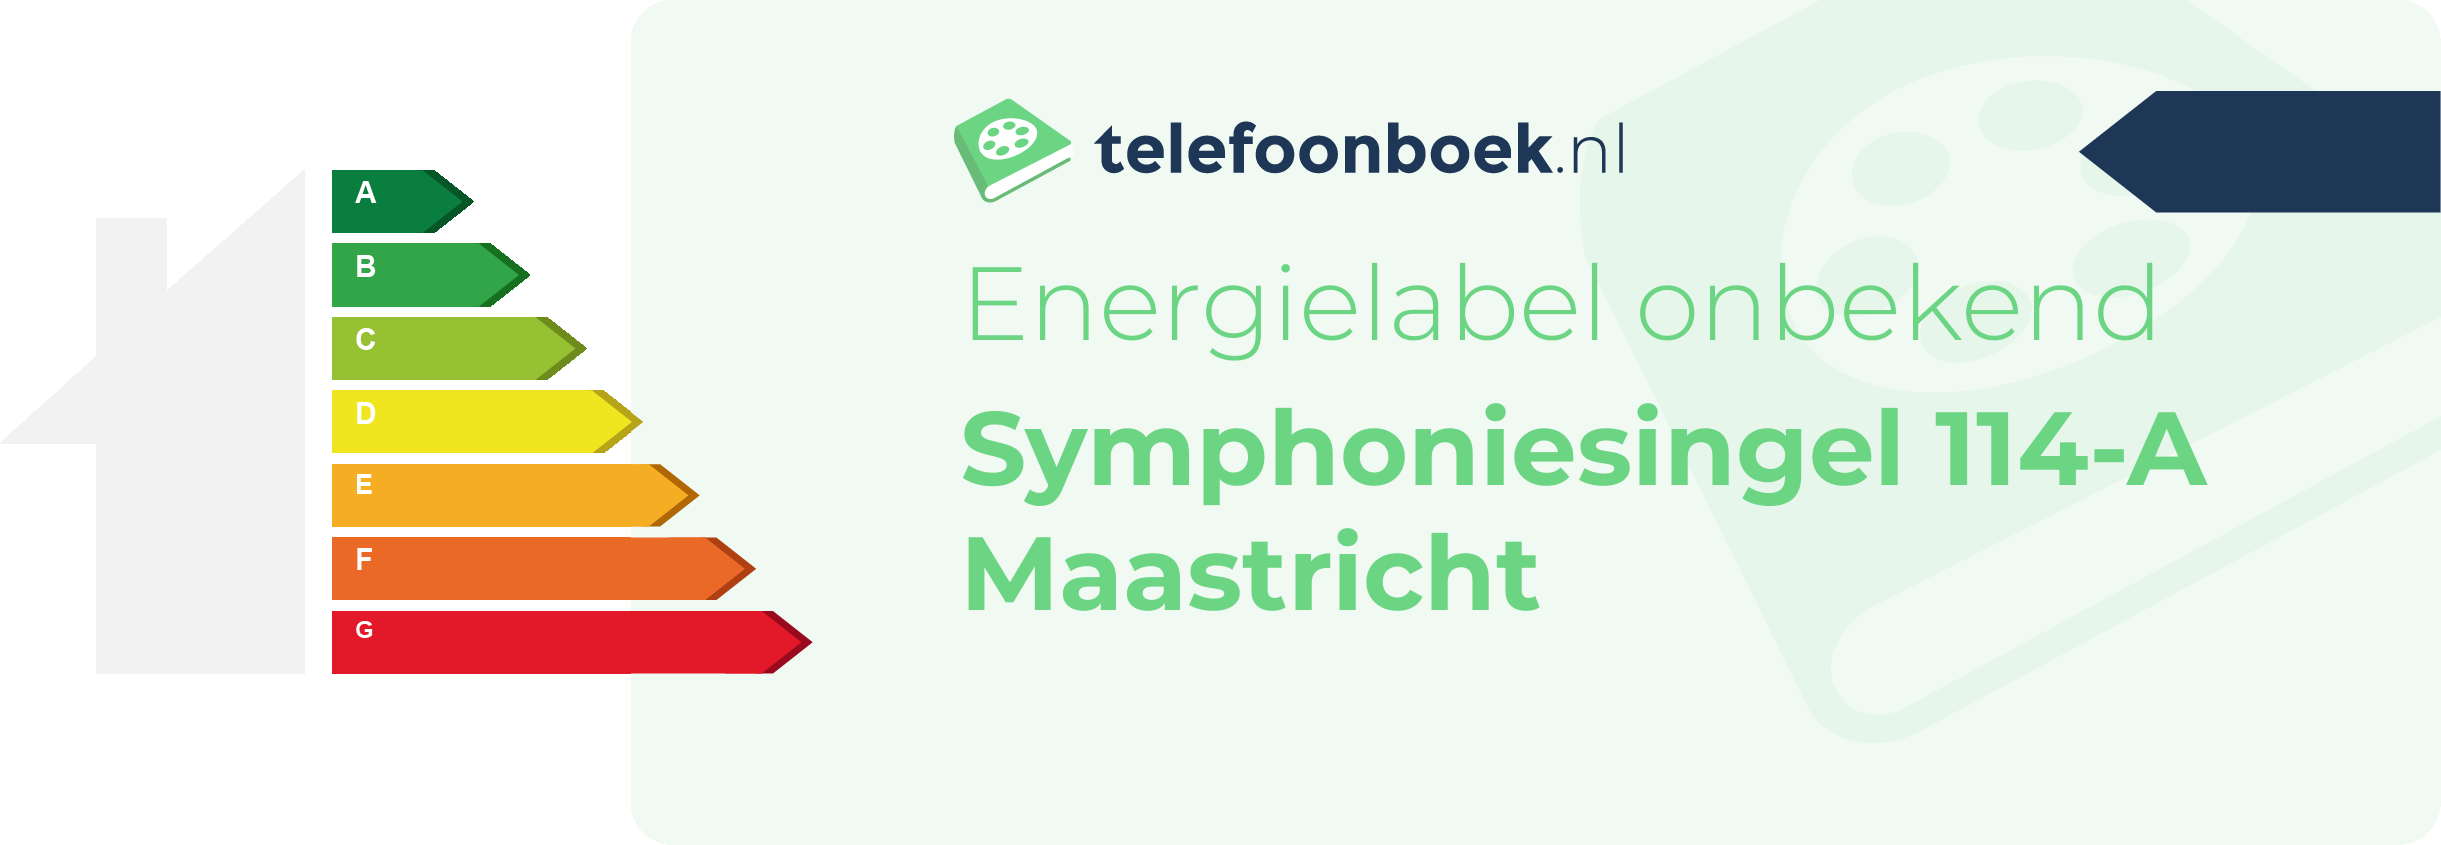 Energielabel Symphoniesingel 114-A Maastricht